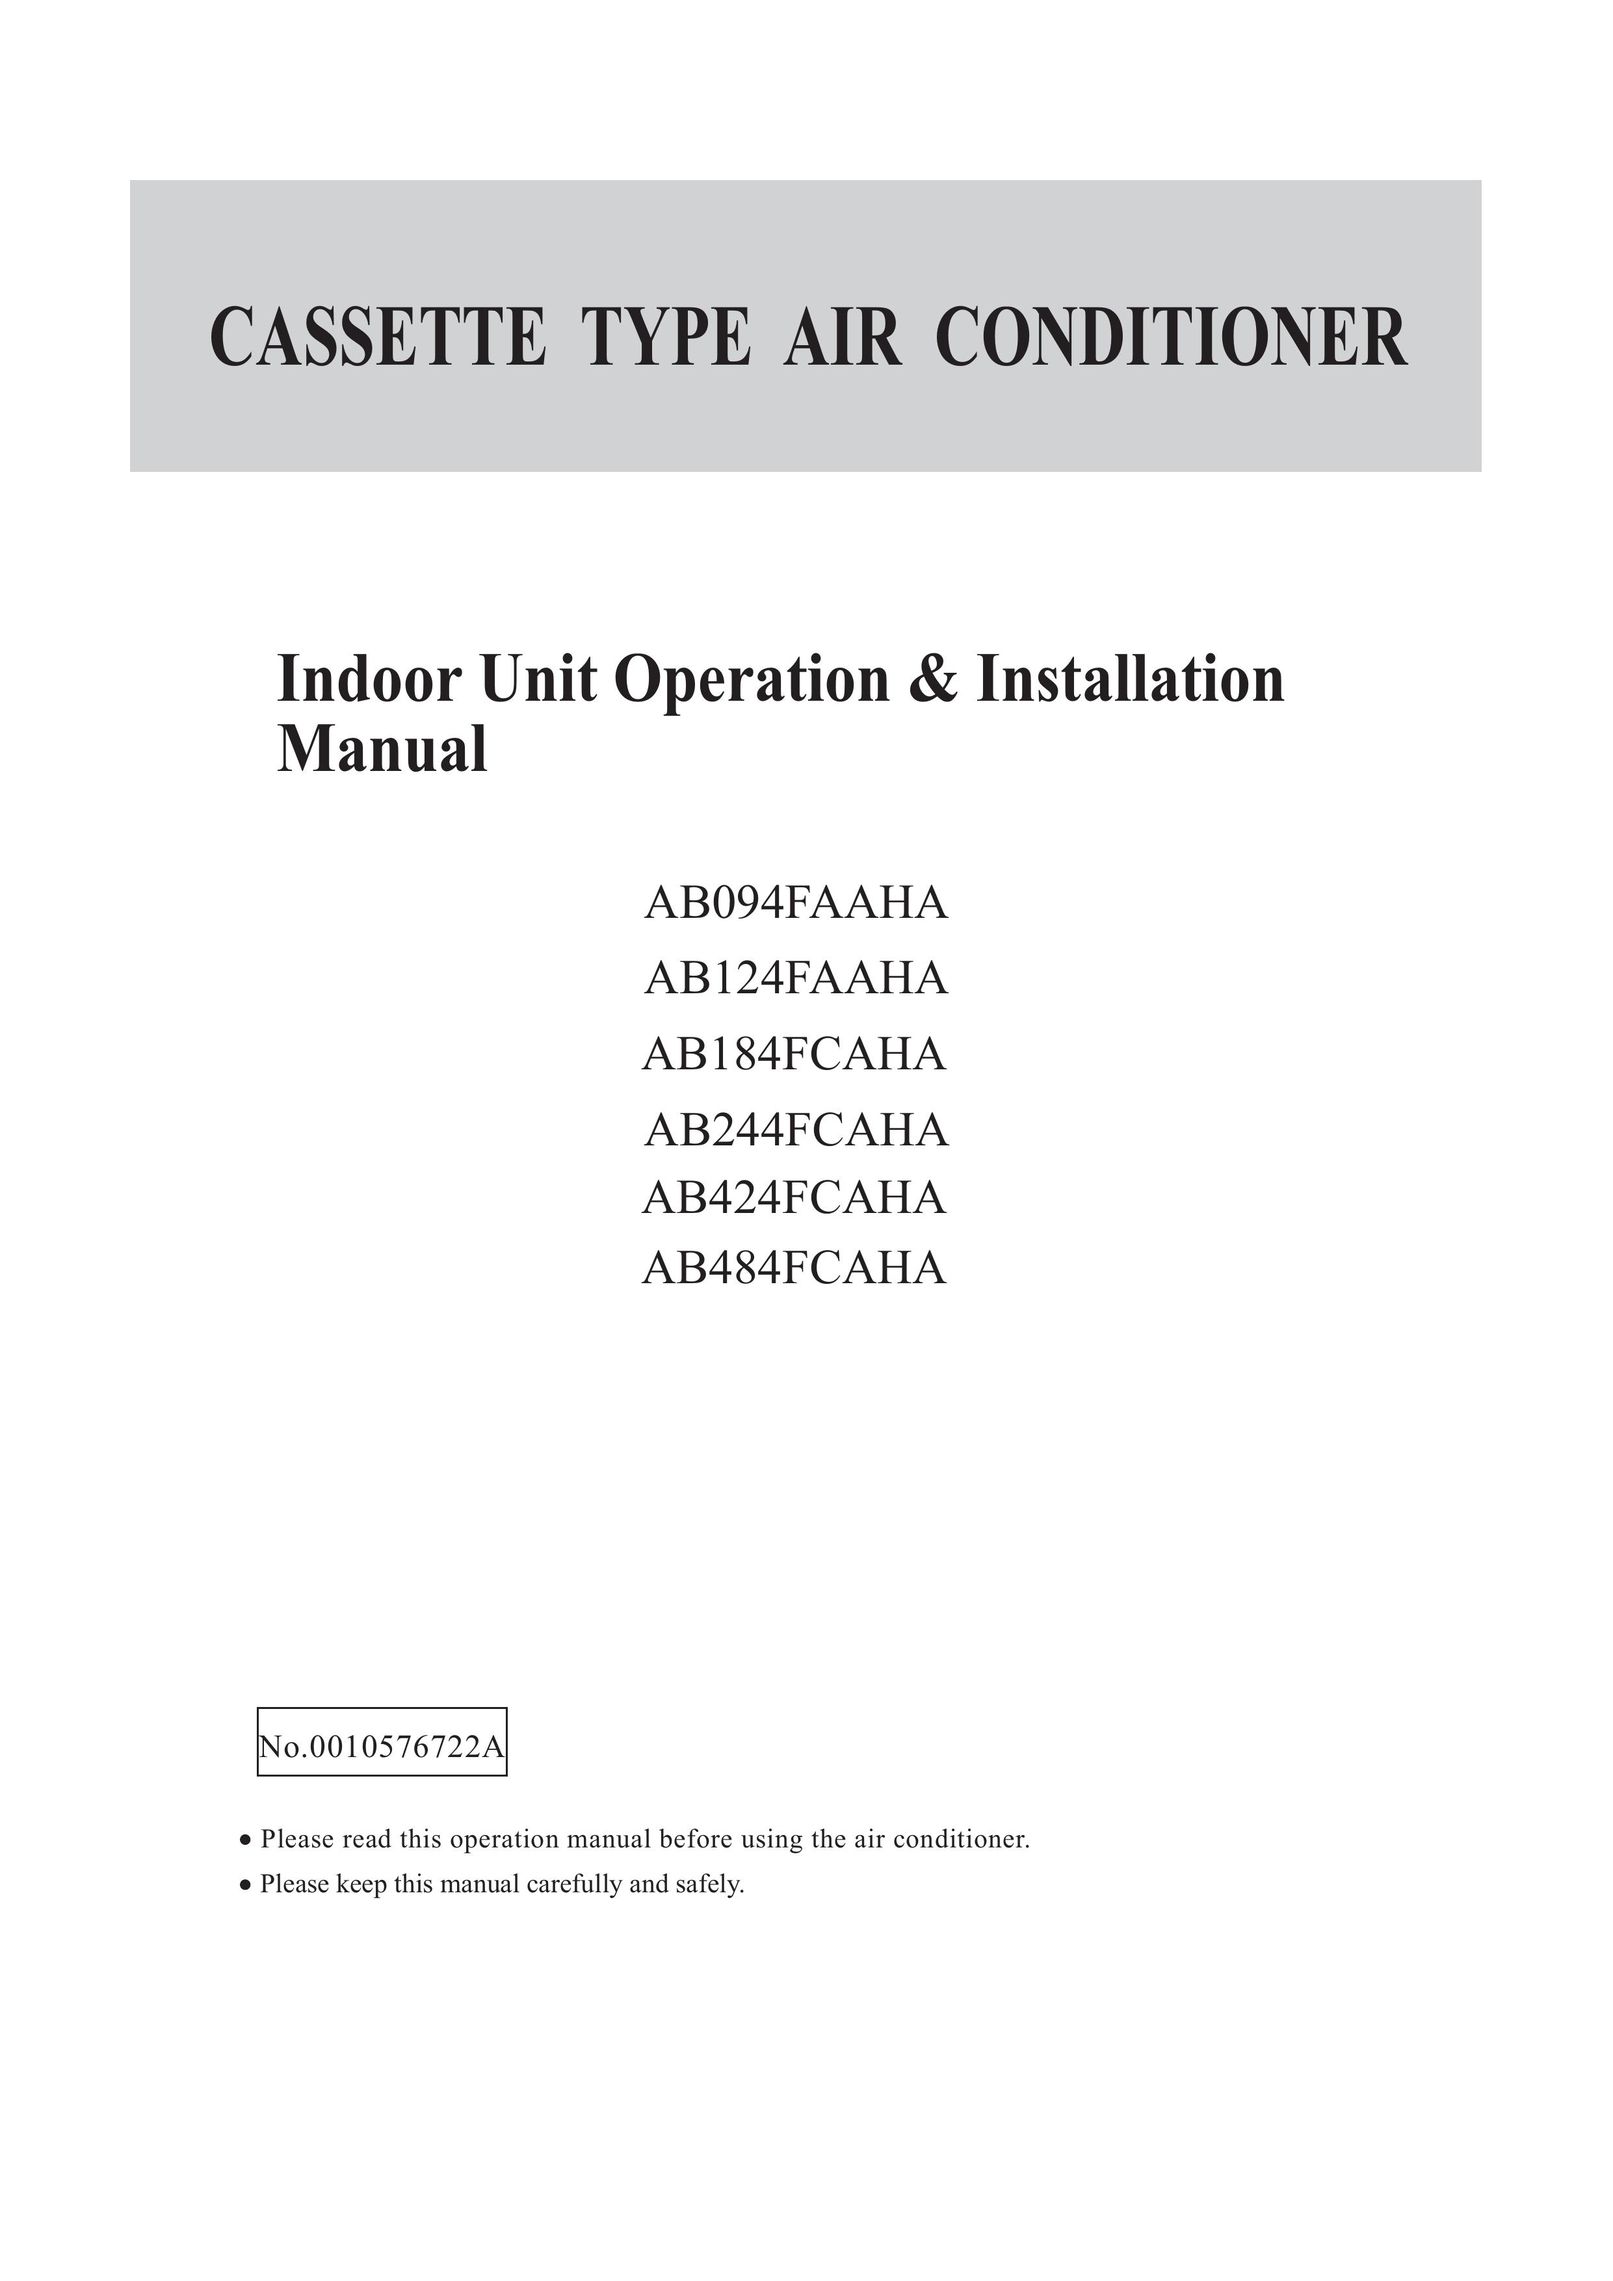 Haier AB424FCAHA Air Conditioner User Manual